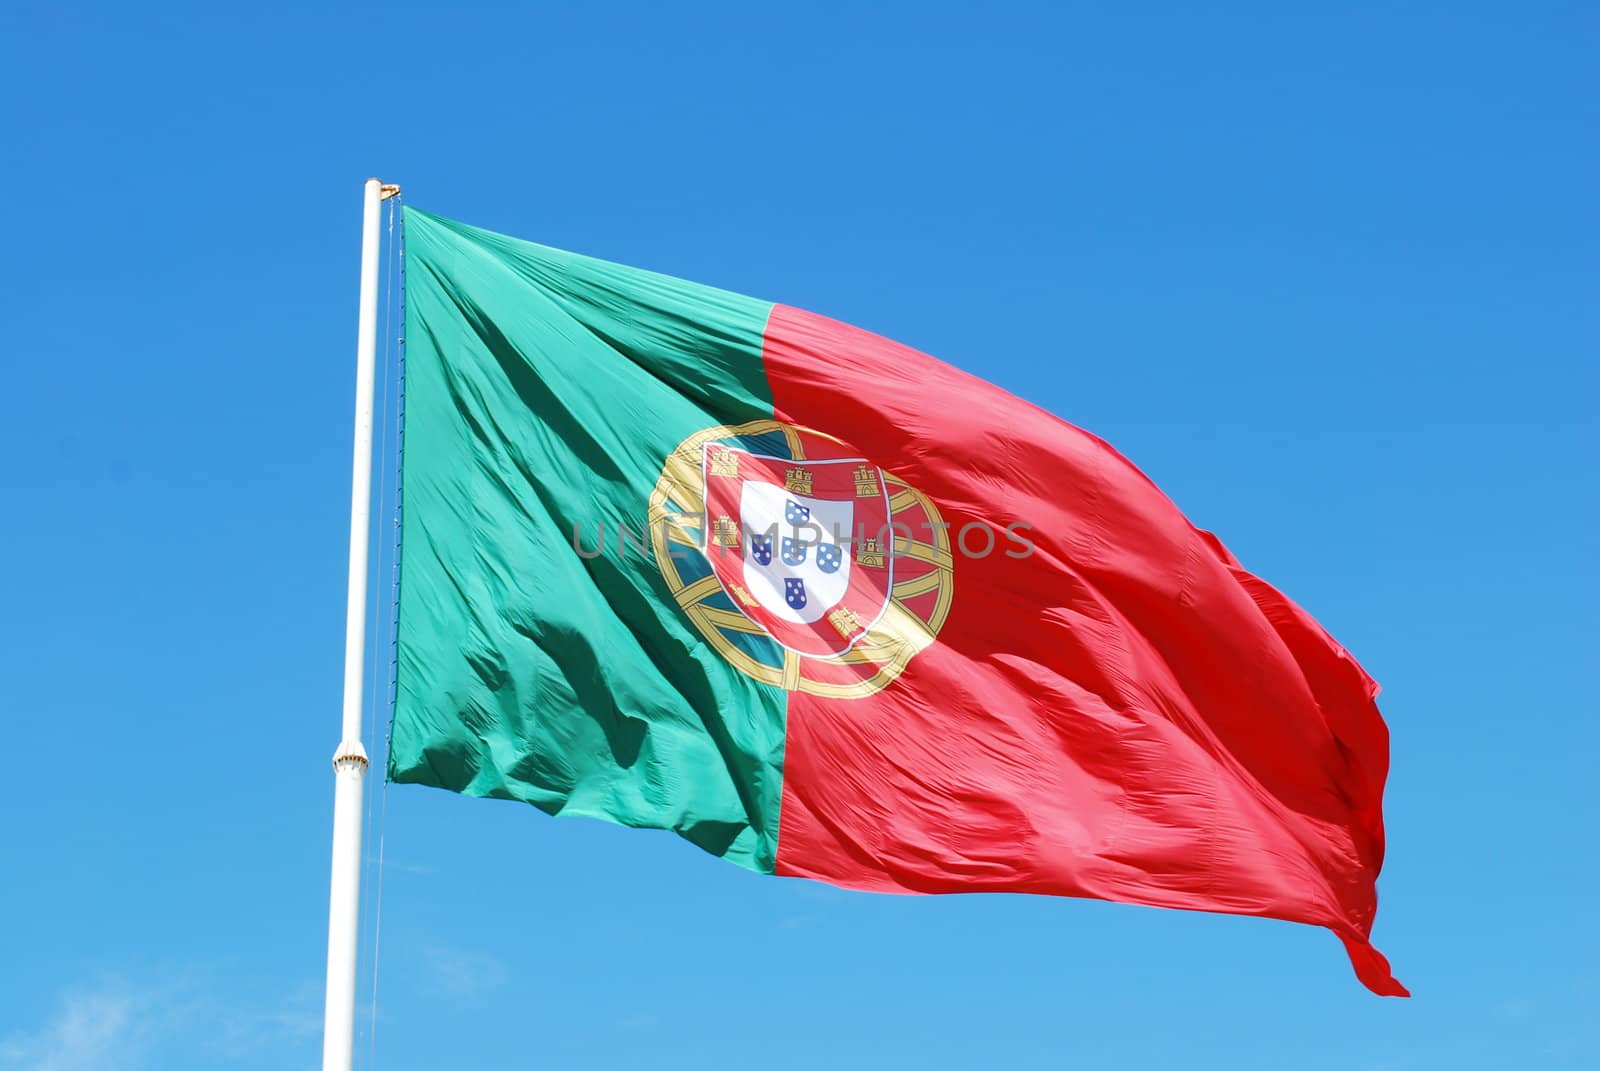 portuguese flag against blue sky background